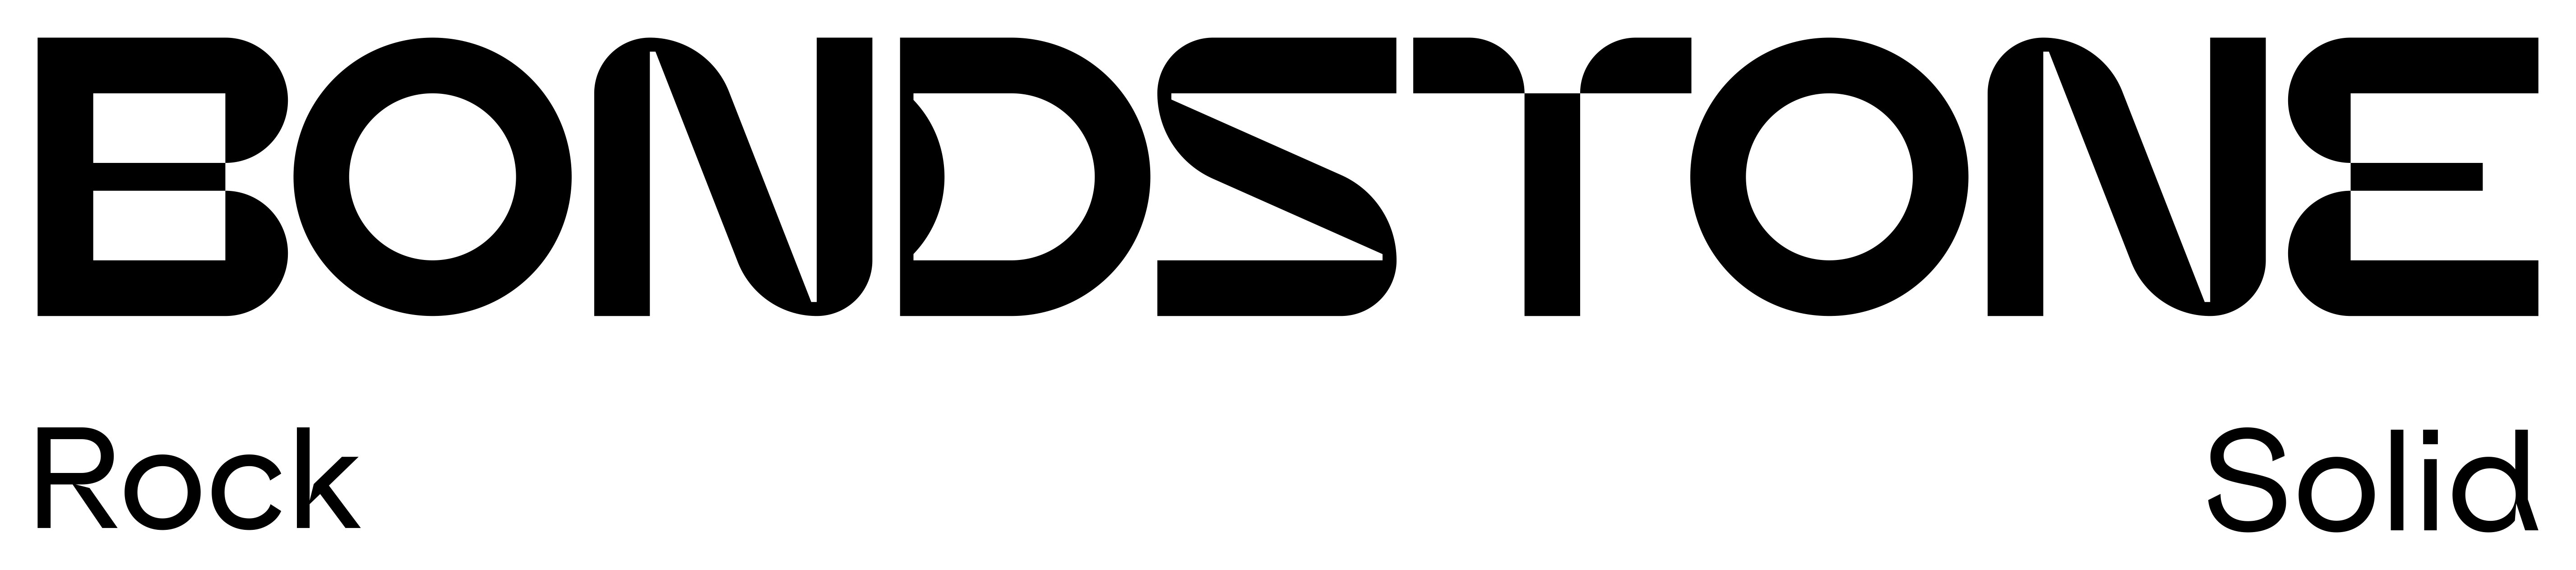 Bondstone logo